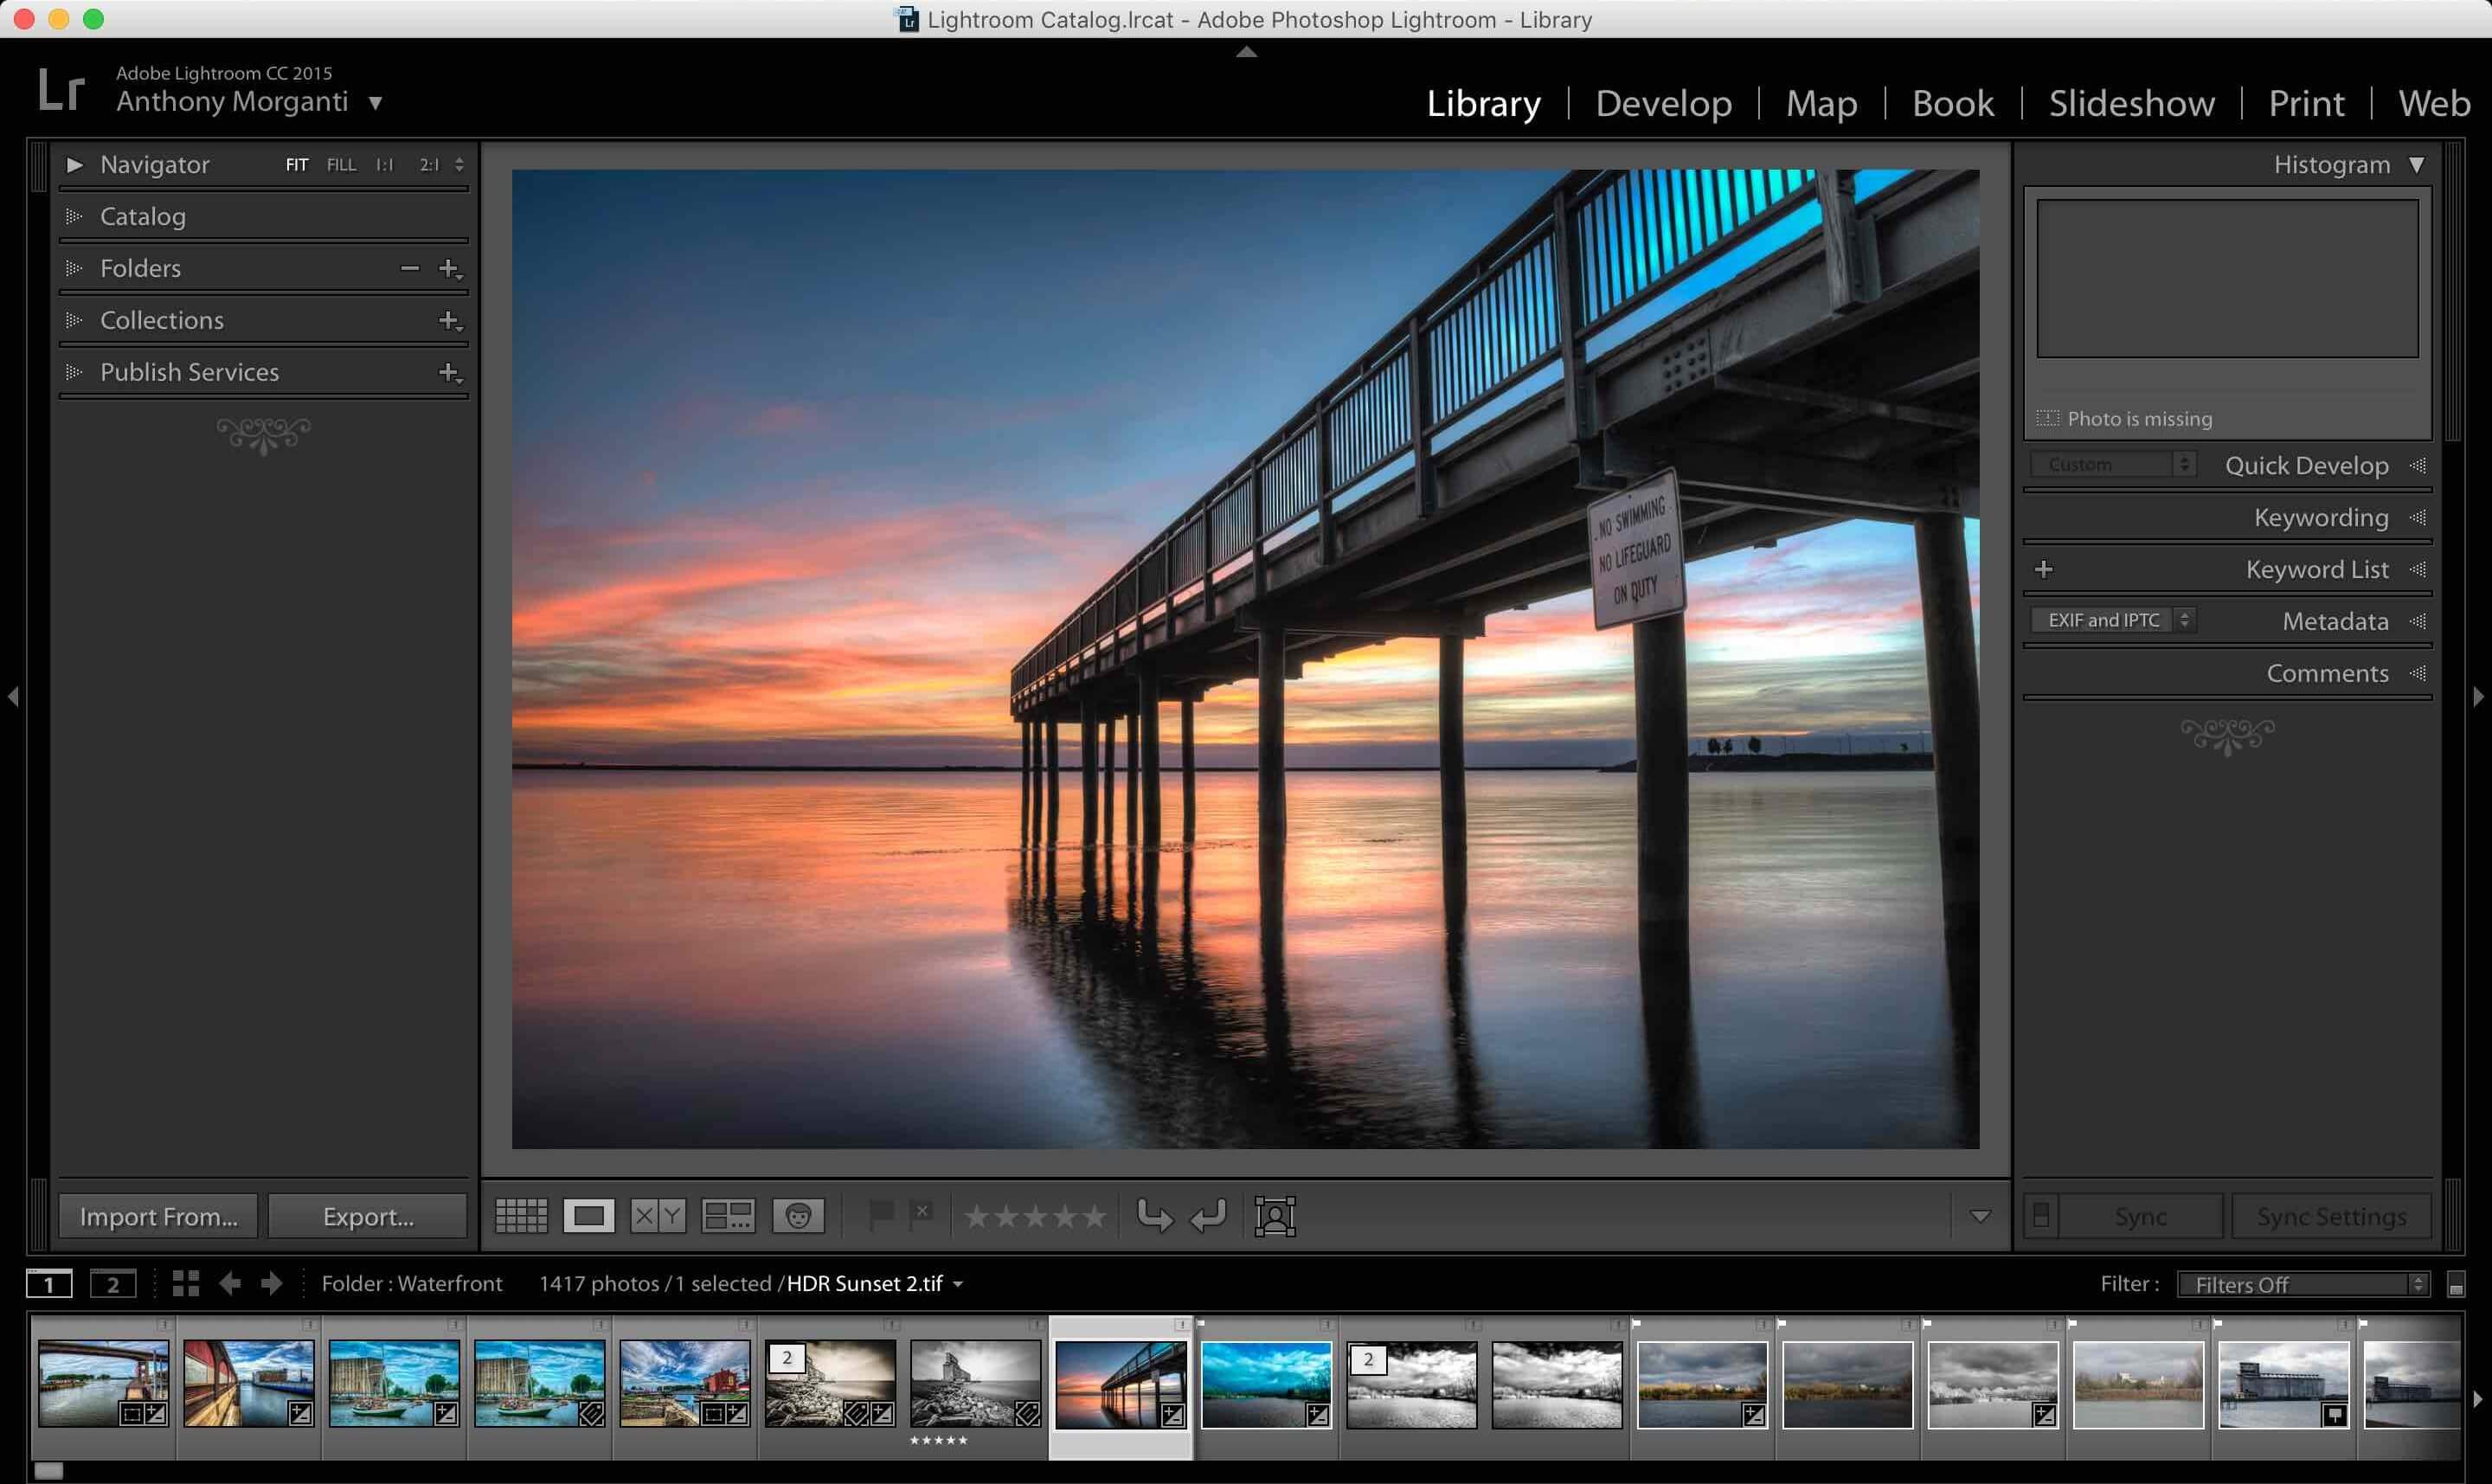 Adobe Photoshop Lightroom 3 For Mac